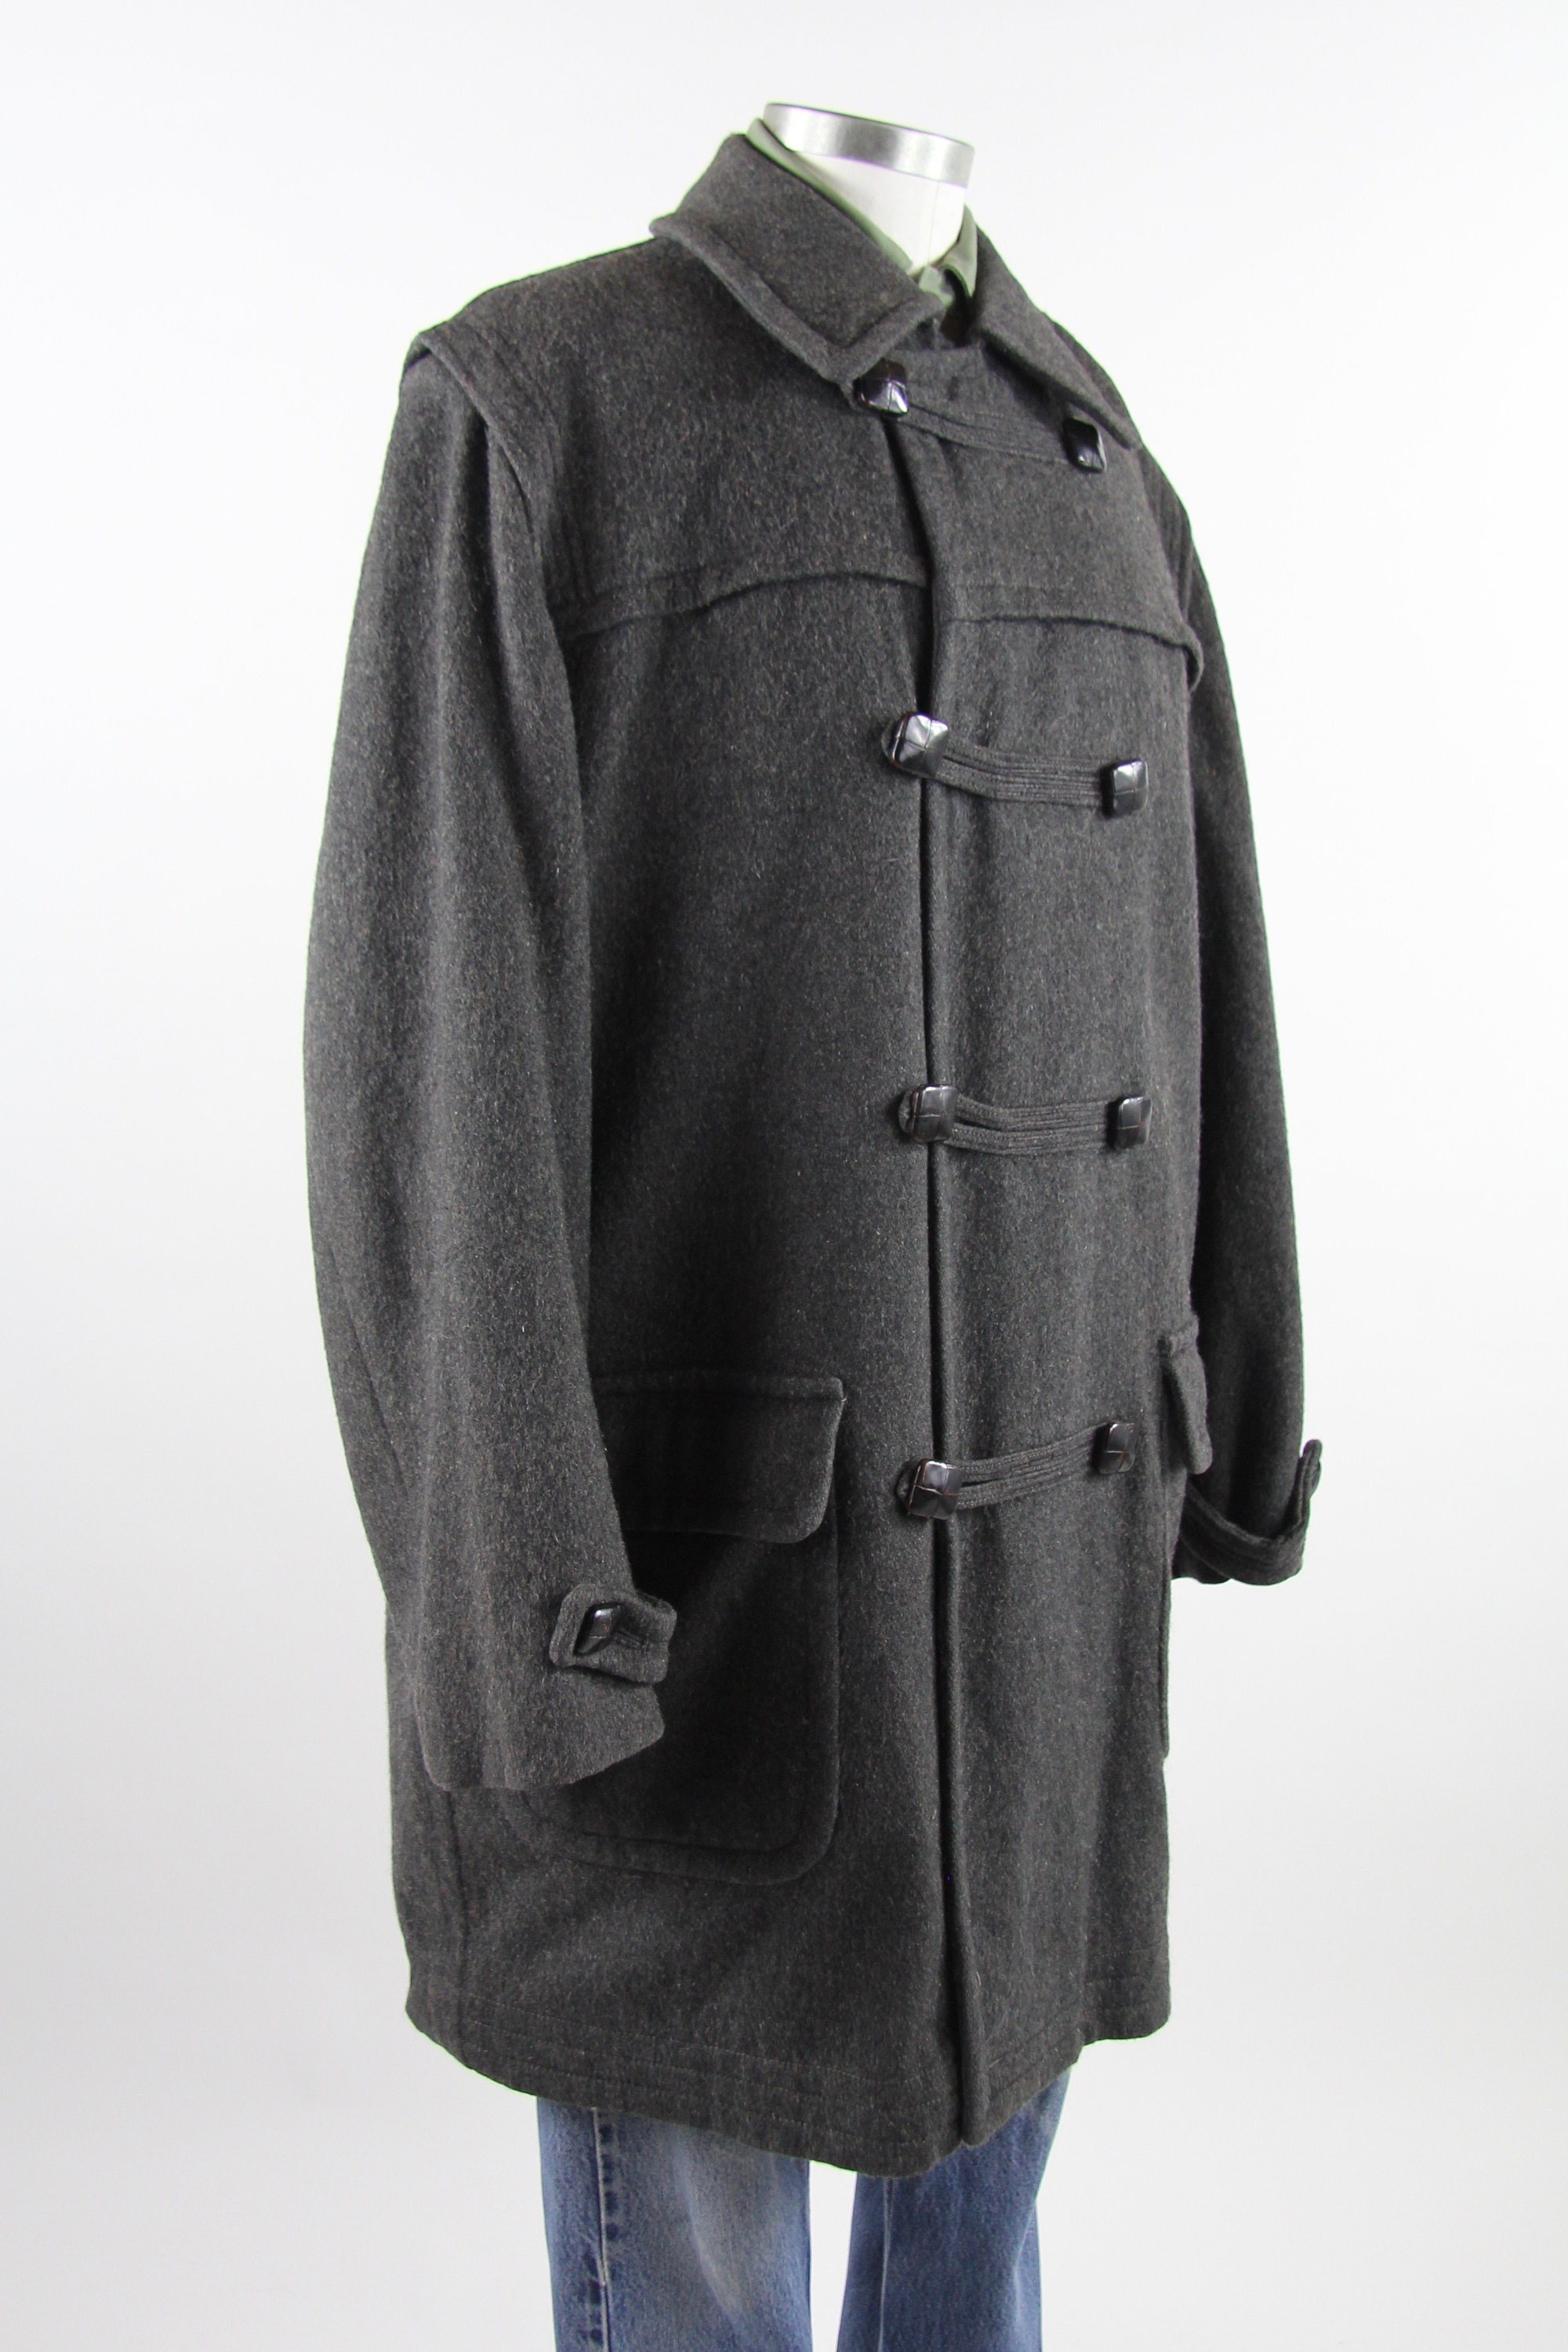 Men's Grey Peacoat Wool Heavy Winter Coat by Loden Vintage Size Large ...